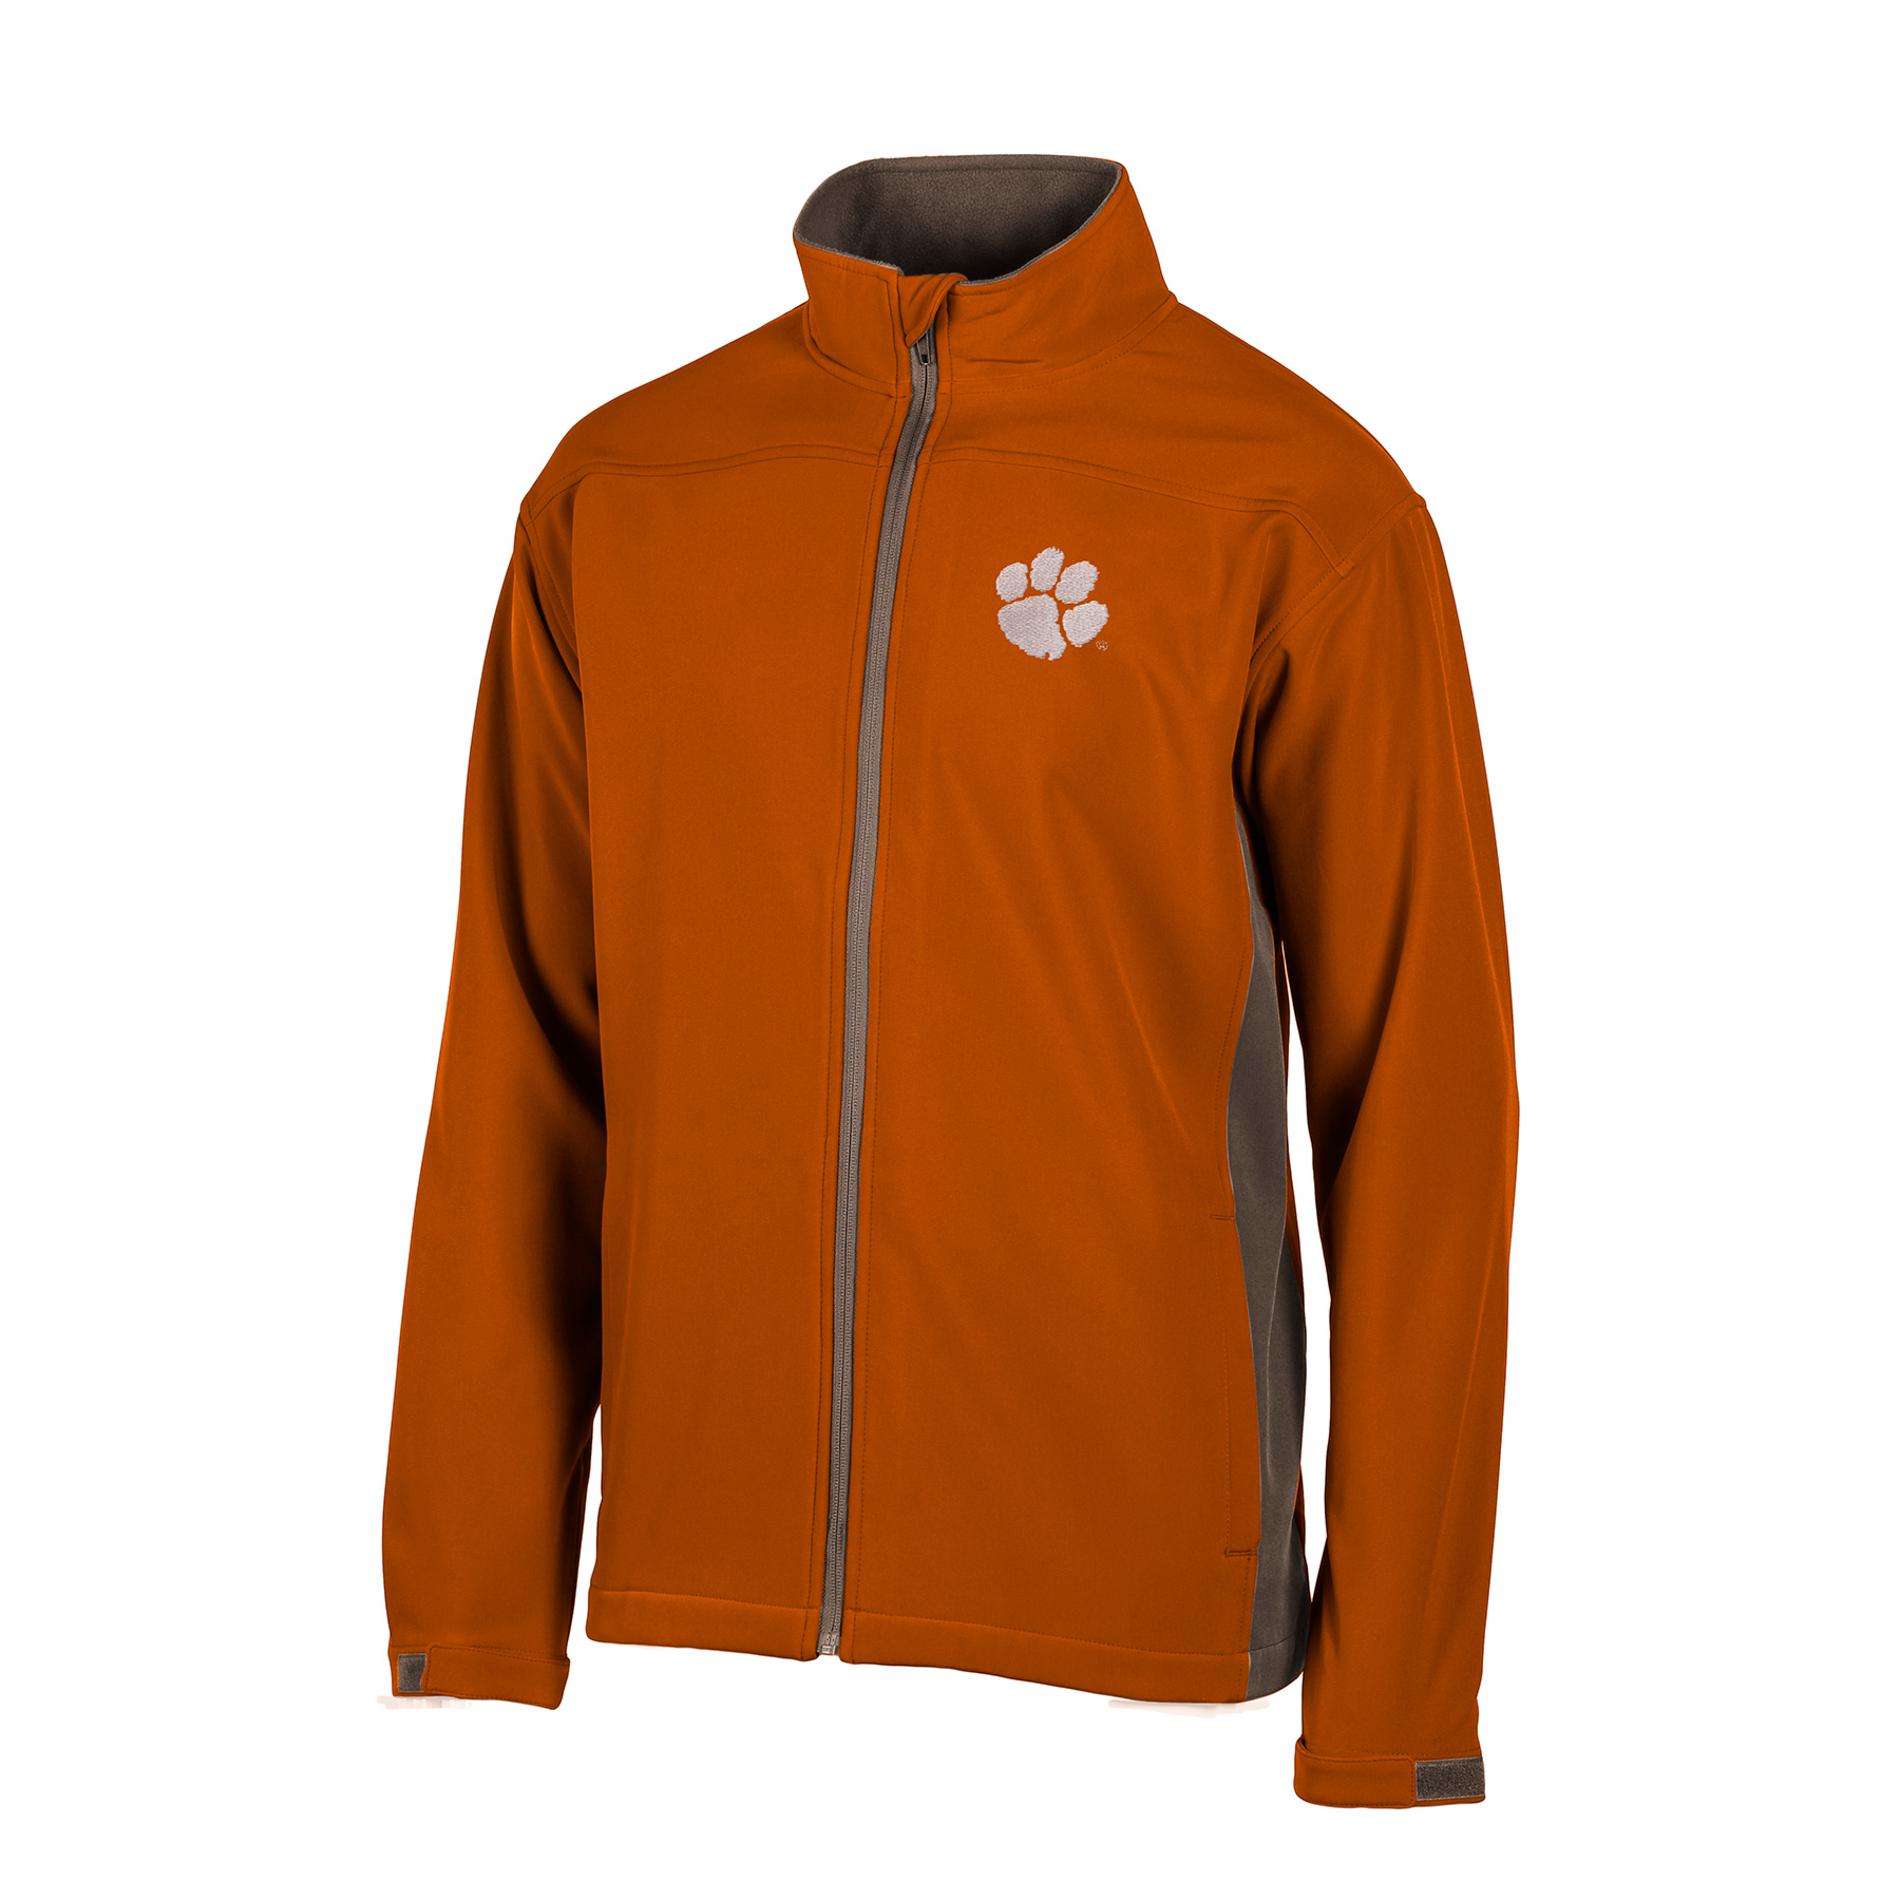 NCAA Men's Track Jacket - Clemson University Tigers